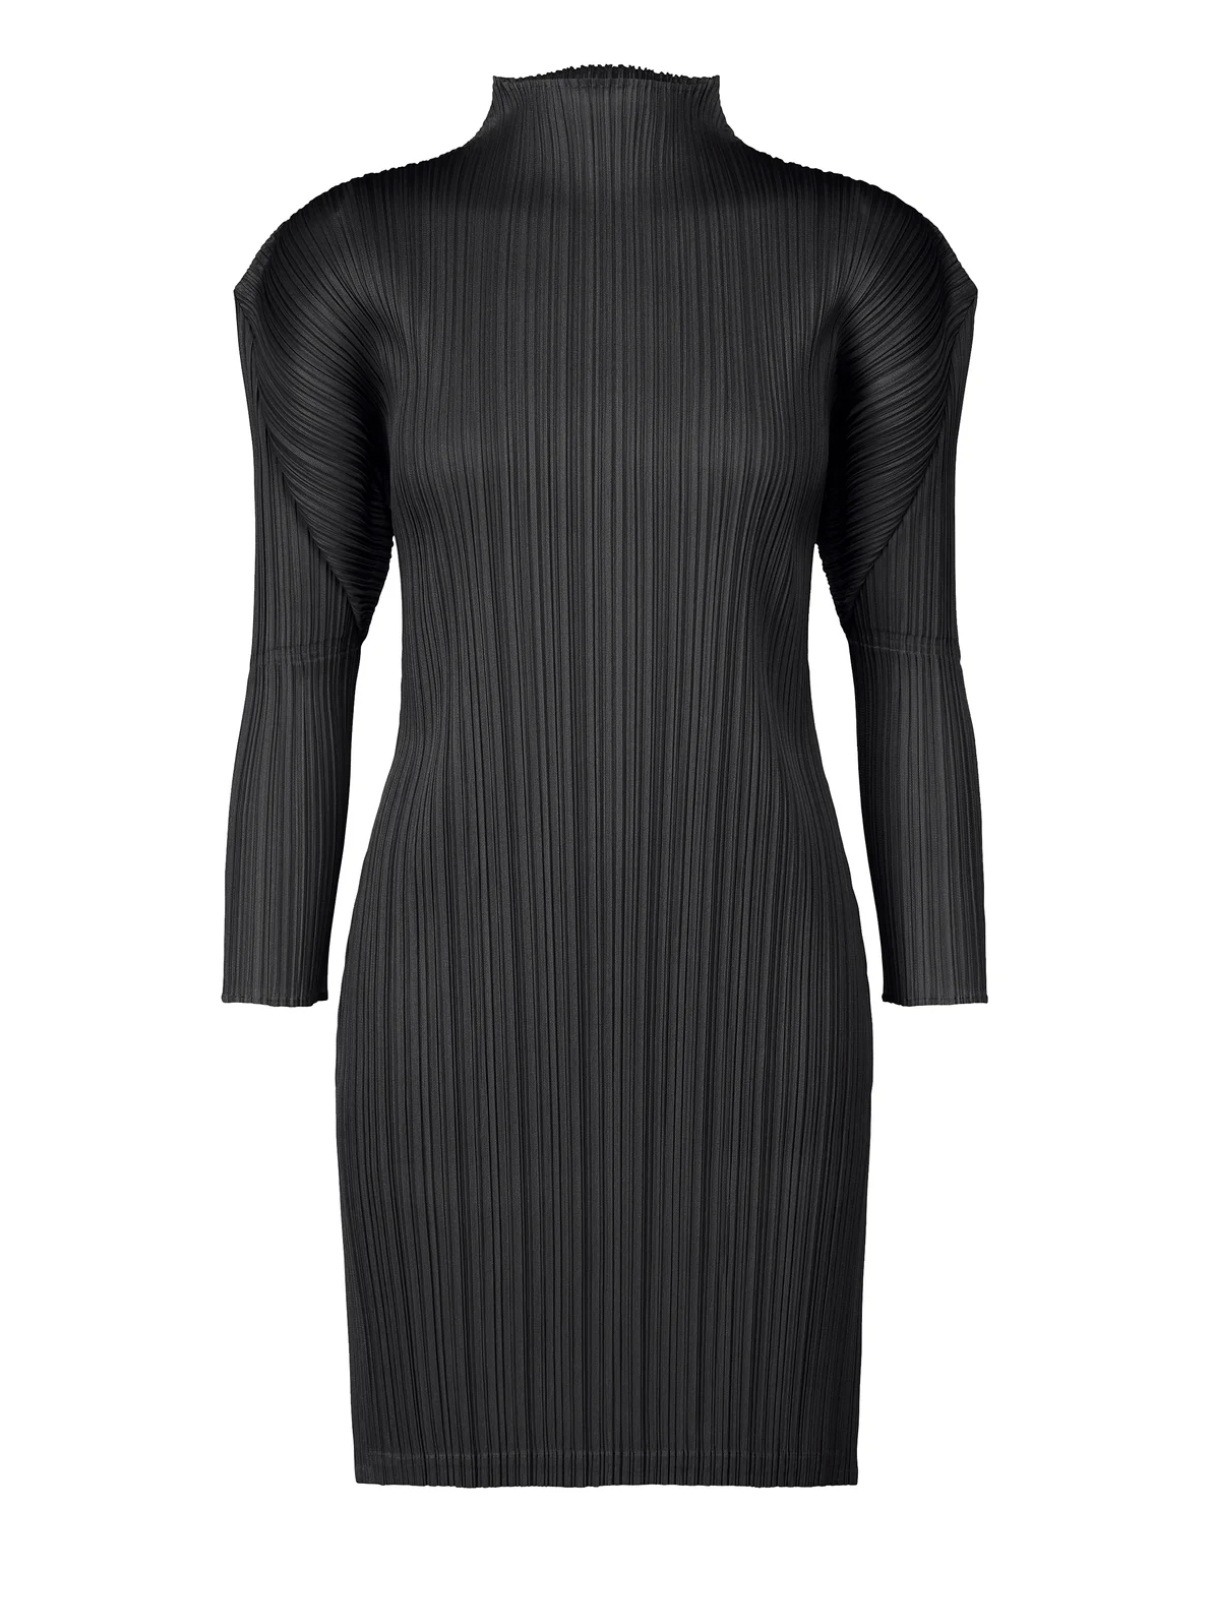 Pleated mini dress, black